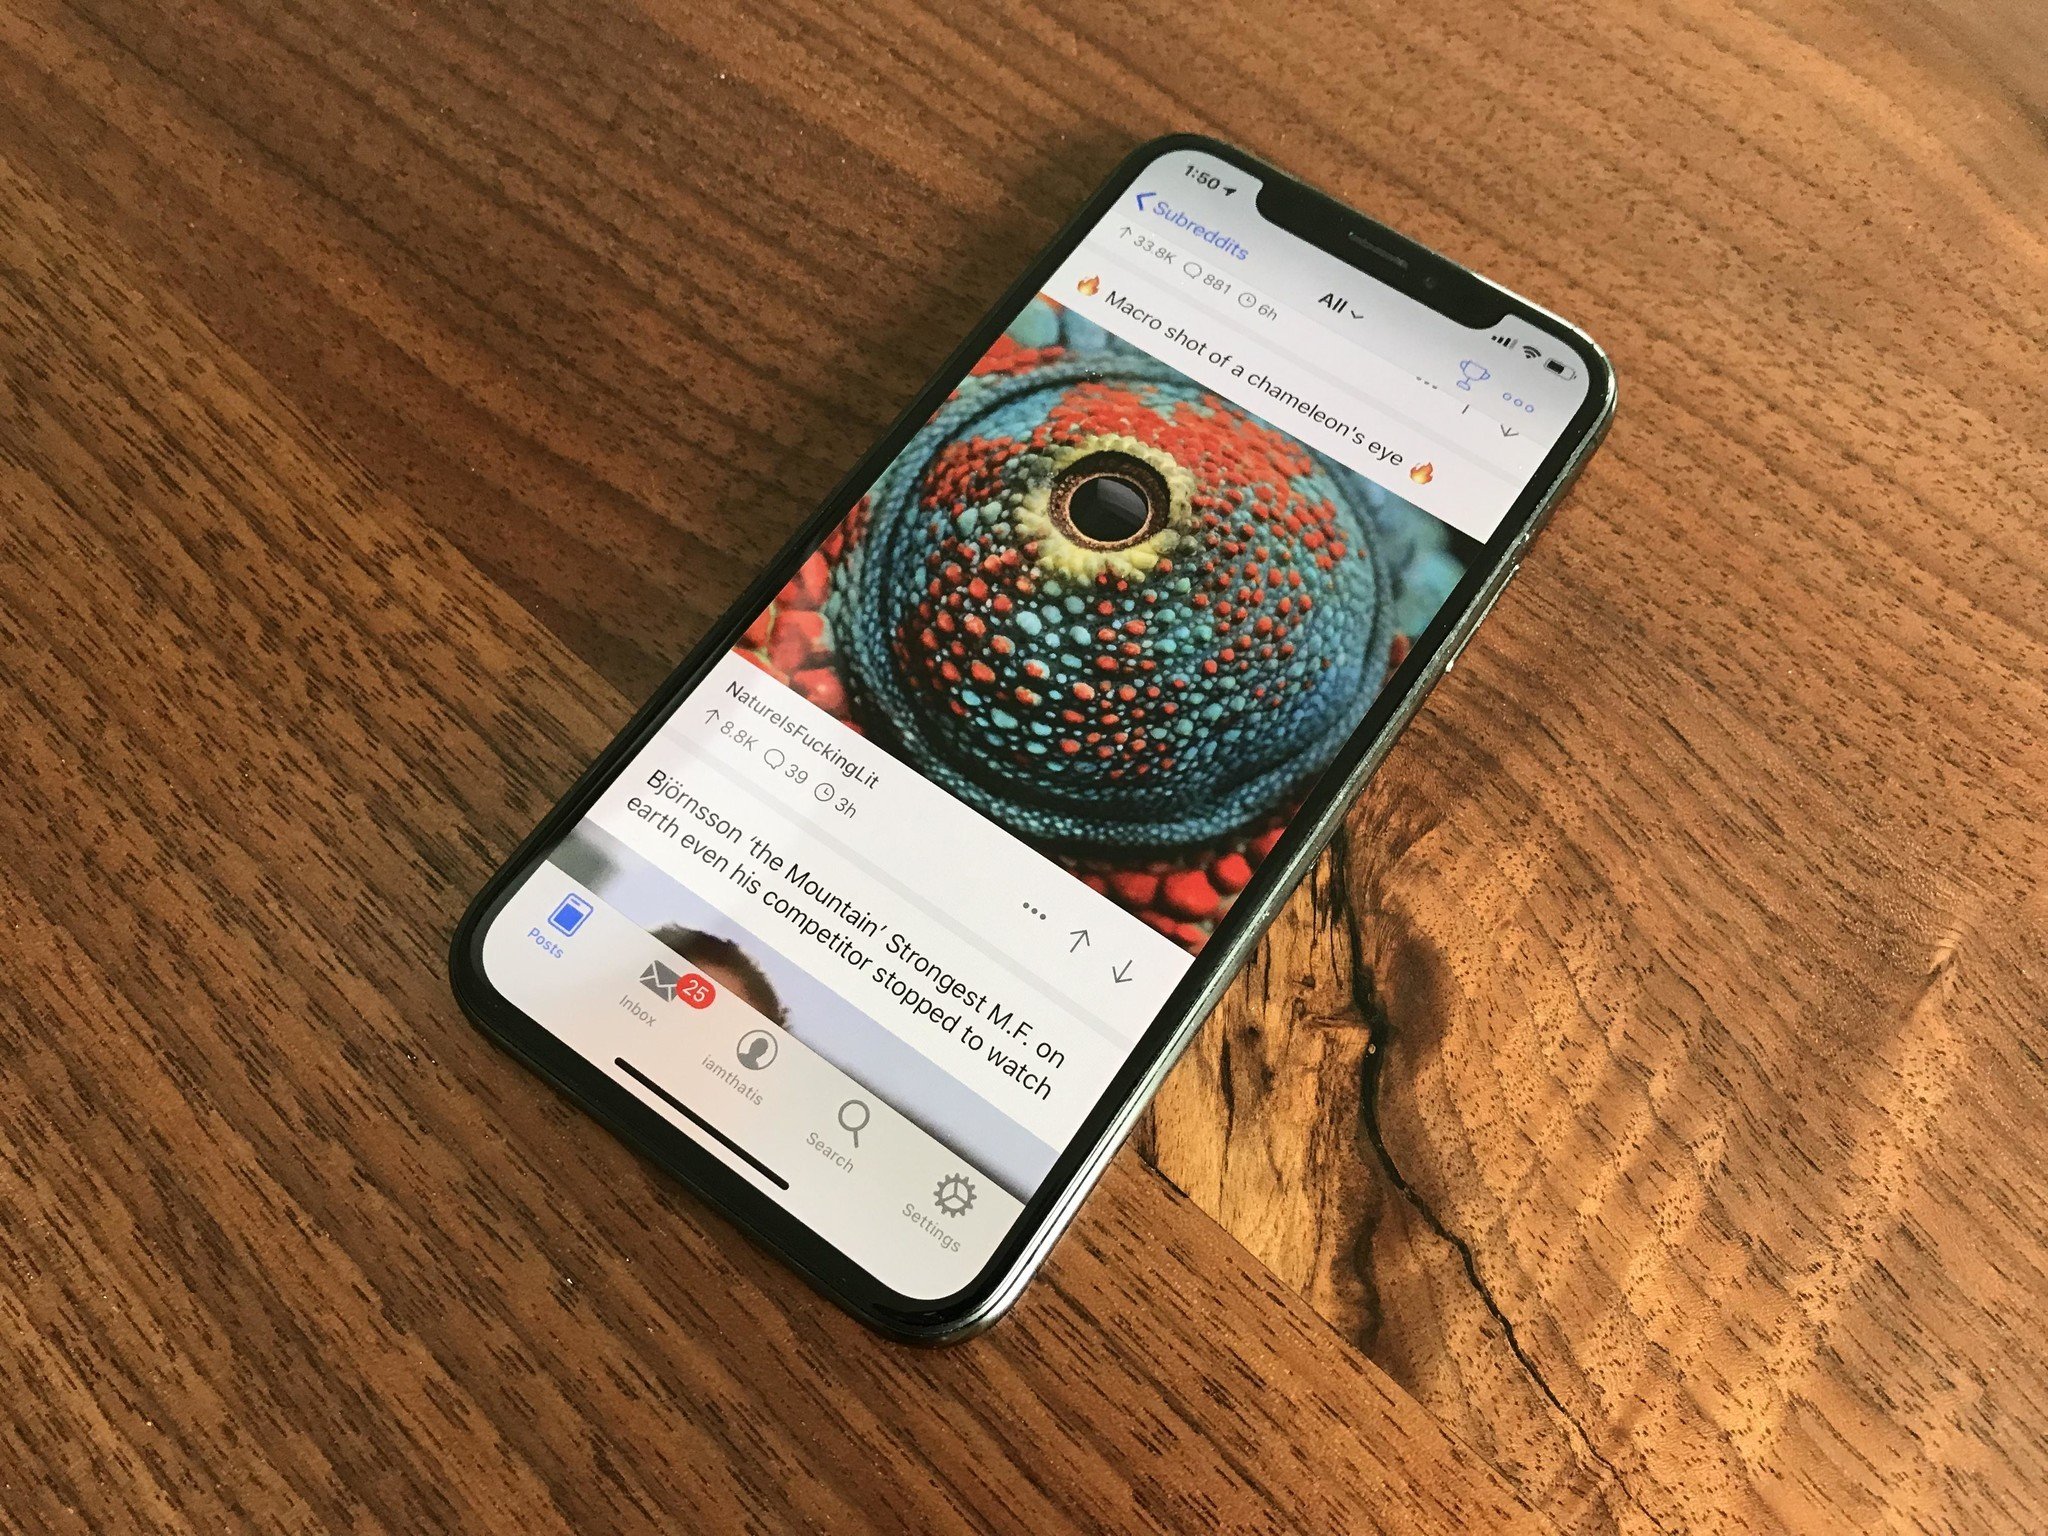 Apollo for Reddit on iPhone